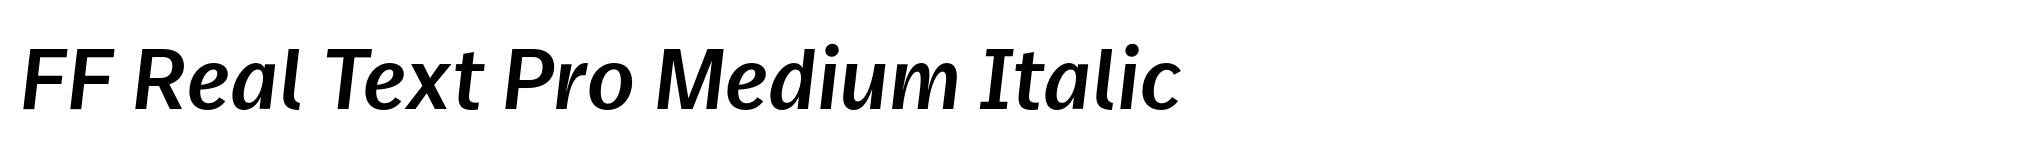 FF Real Text Pro Medium Italic image